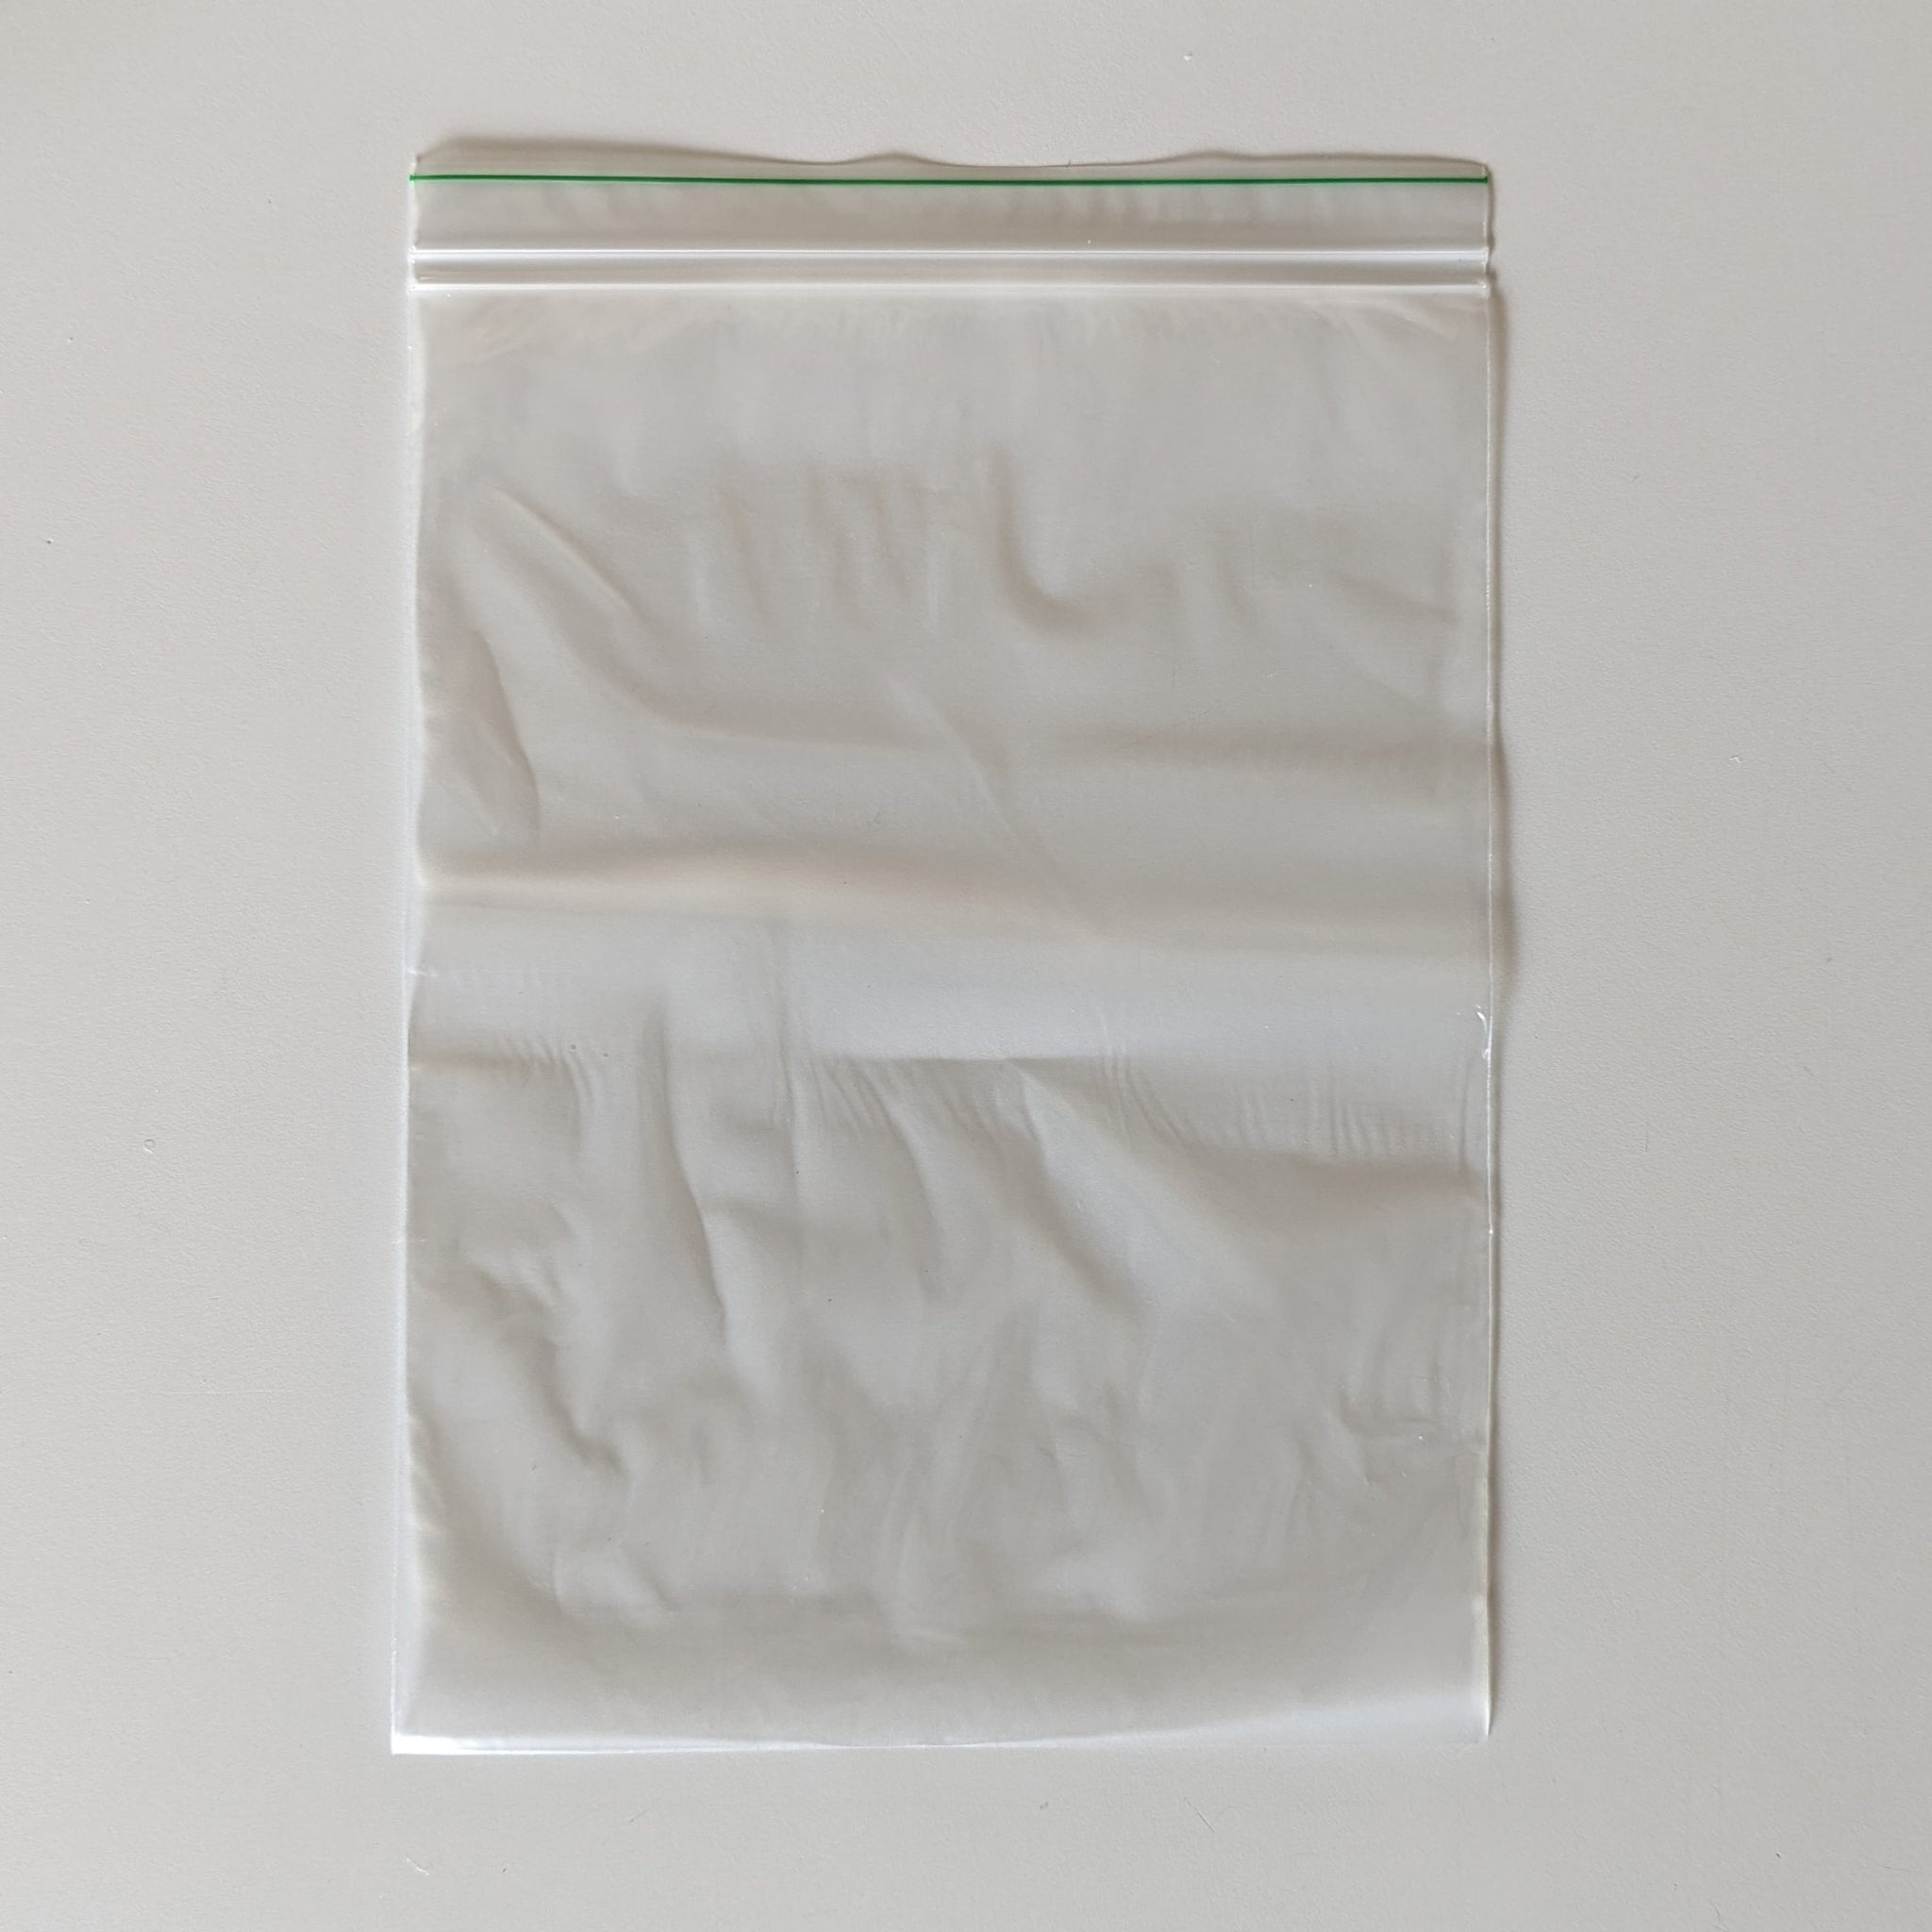 Reclosable Plastic Zipper Bags 2 Mil, Clear. (100 Bags)